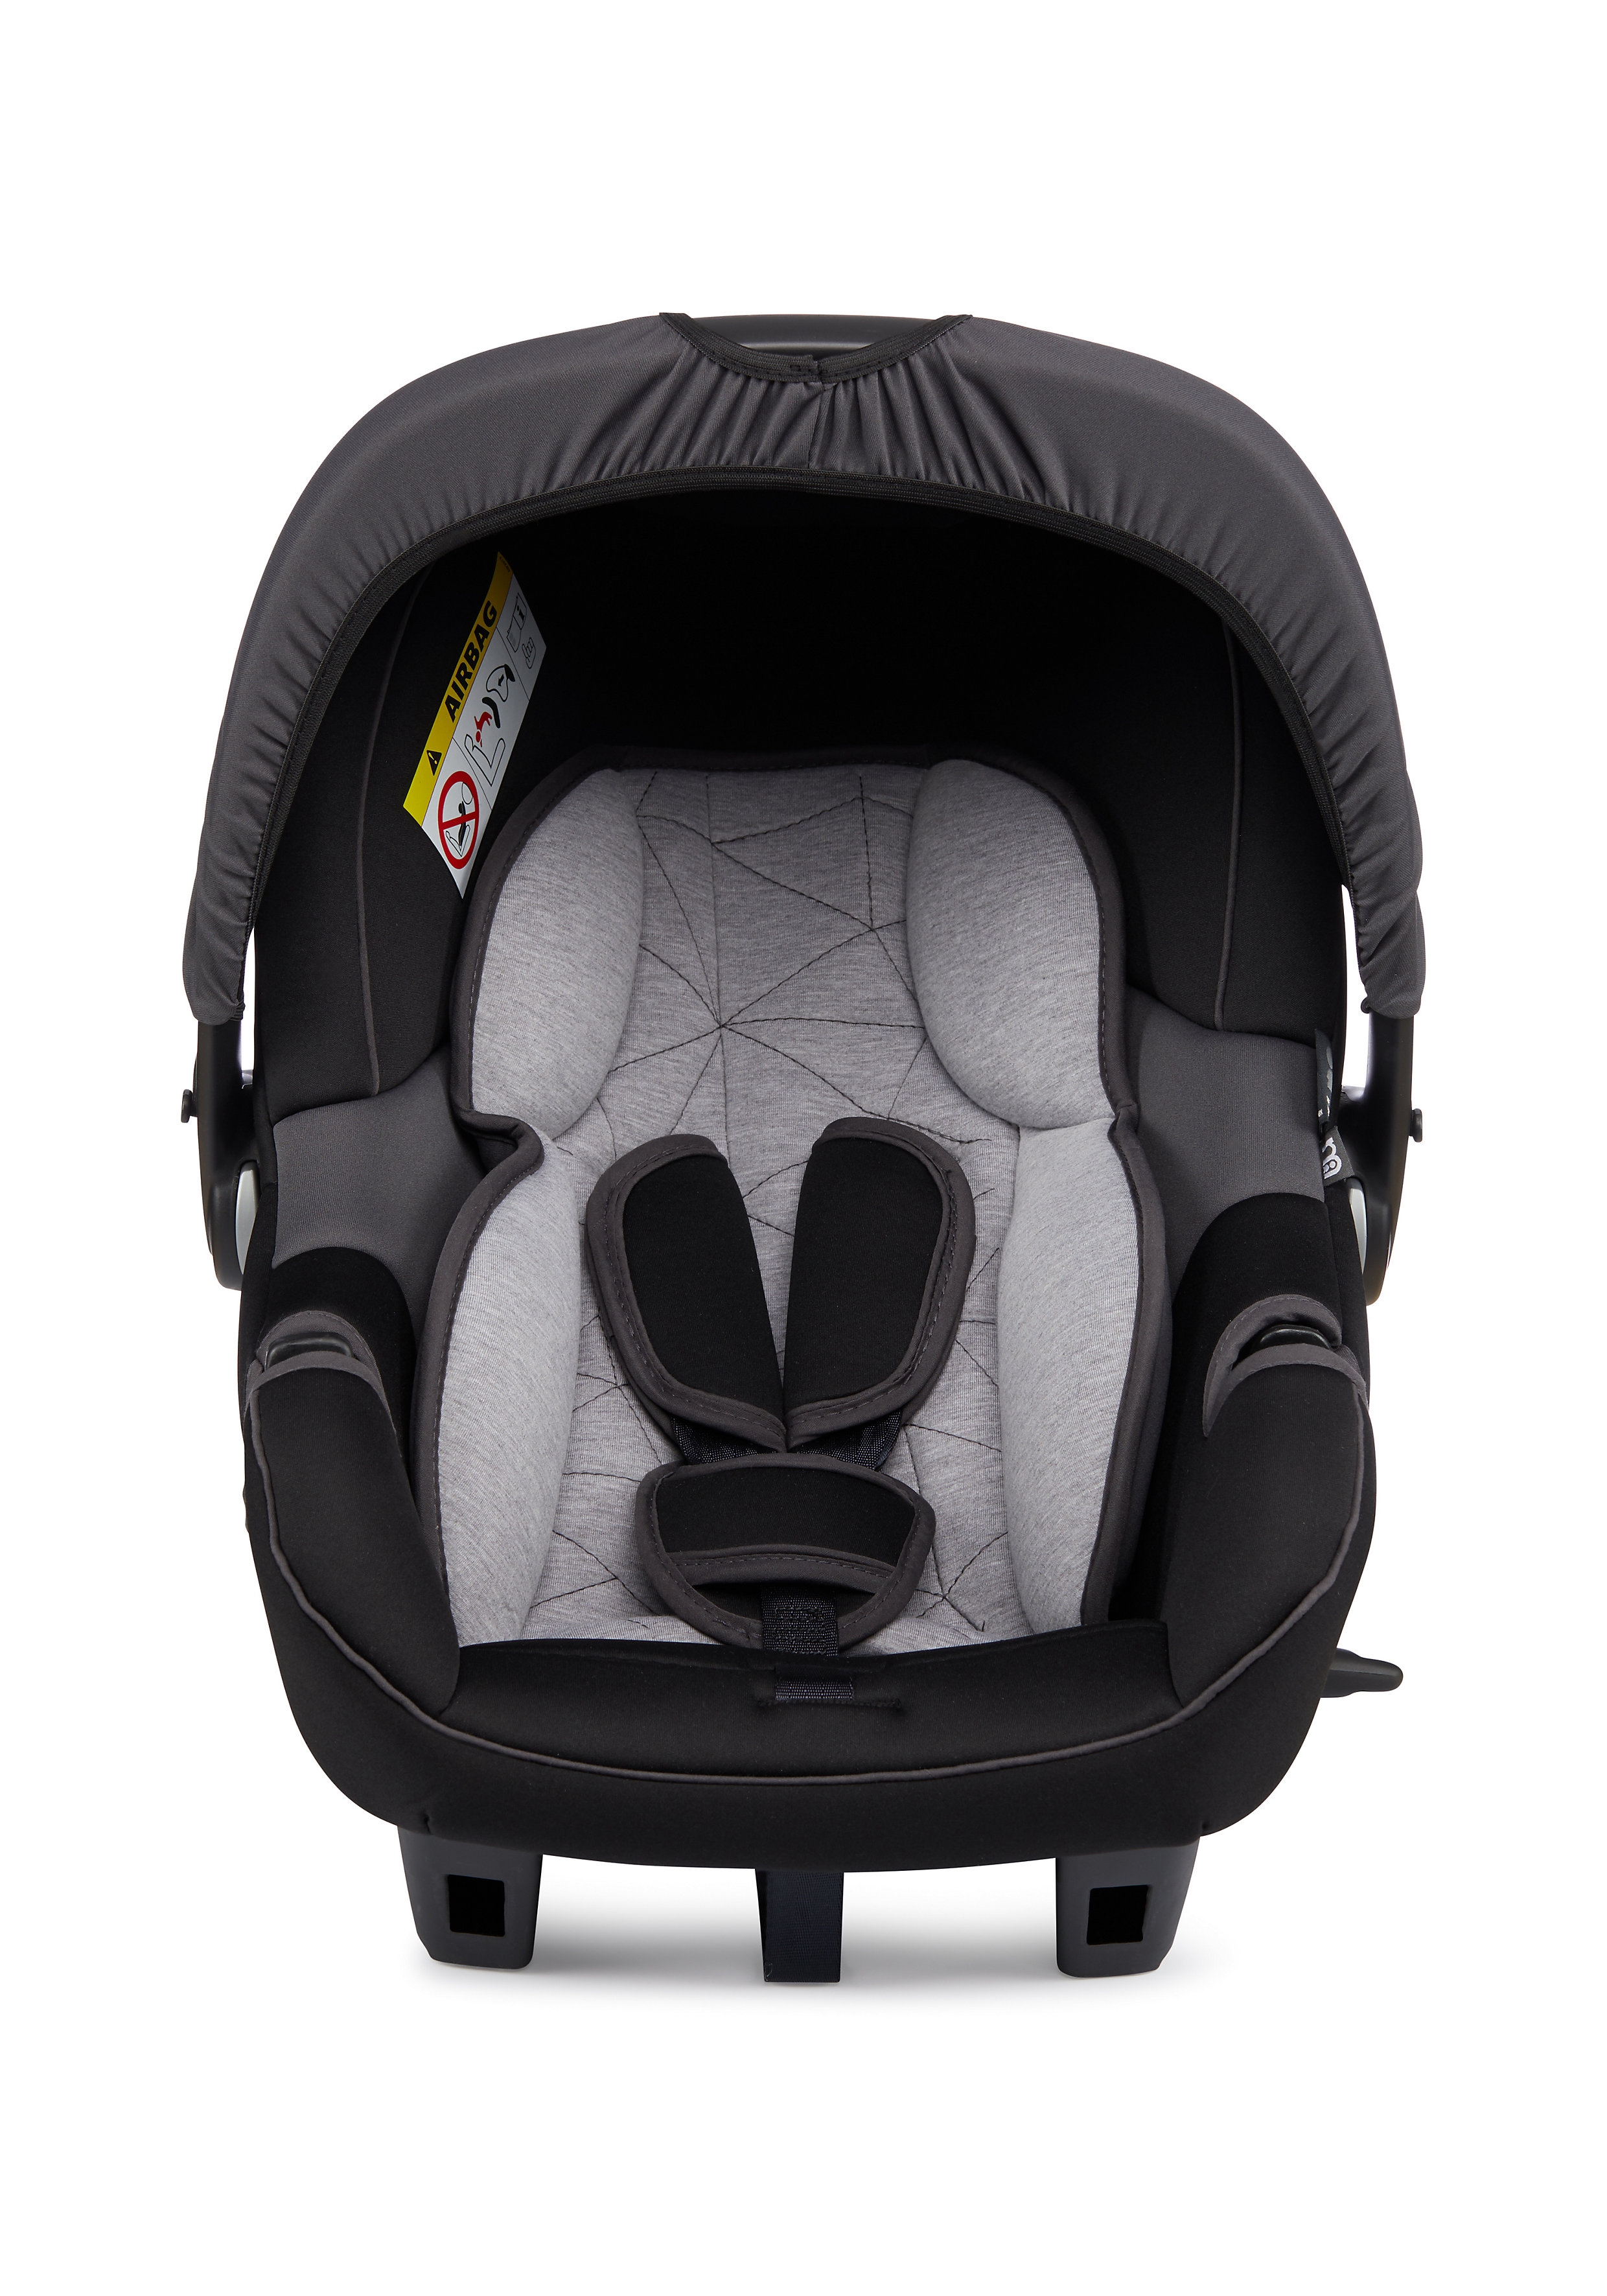 Mothercare | Mothercare Car Seat Ziba Black And Grey Multicolor